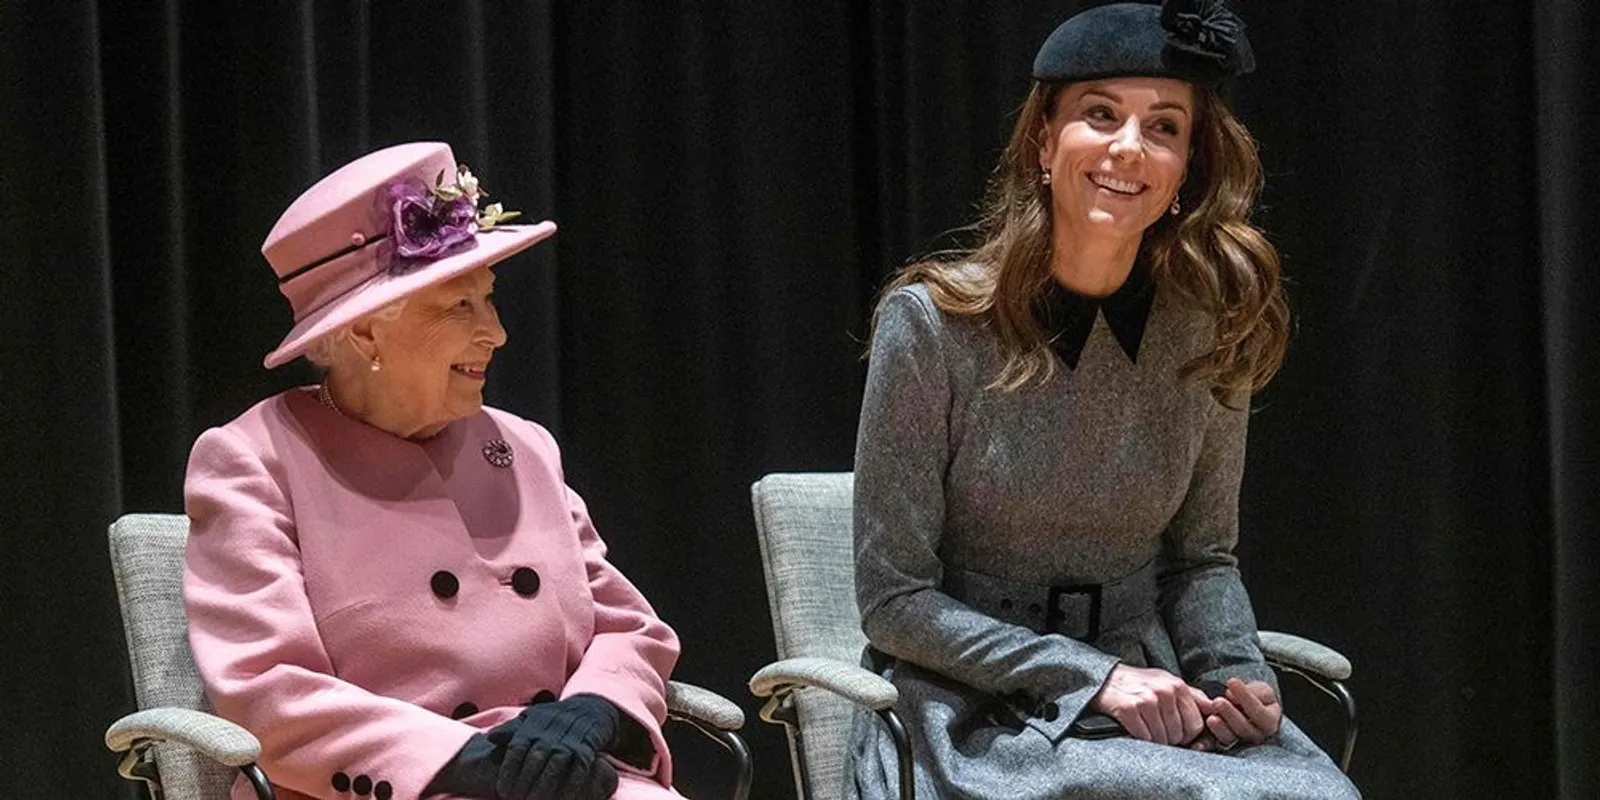 Gelar Terhormat, Kado Pernikahan Kate Middleton dari Ratu Inggris